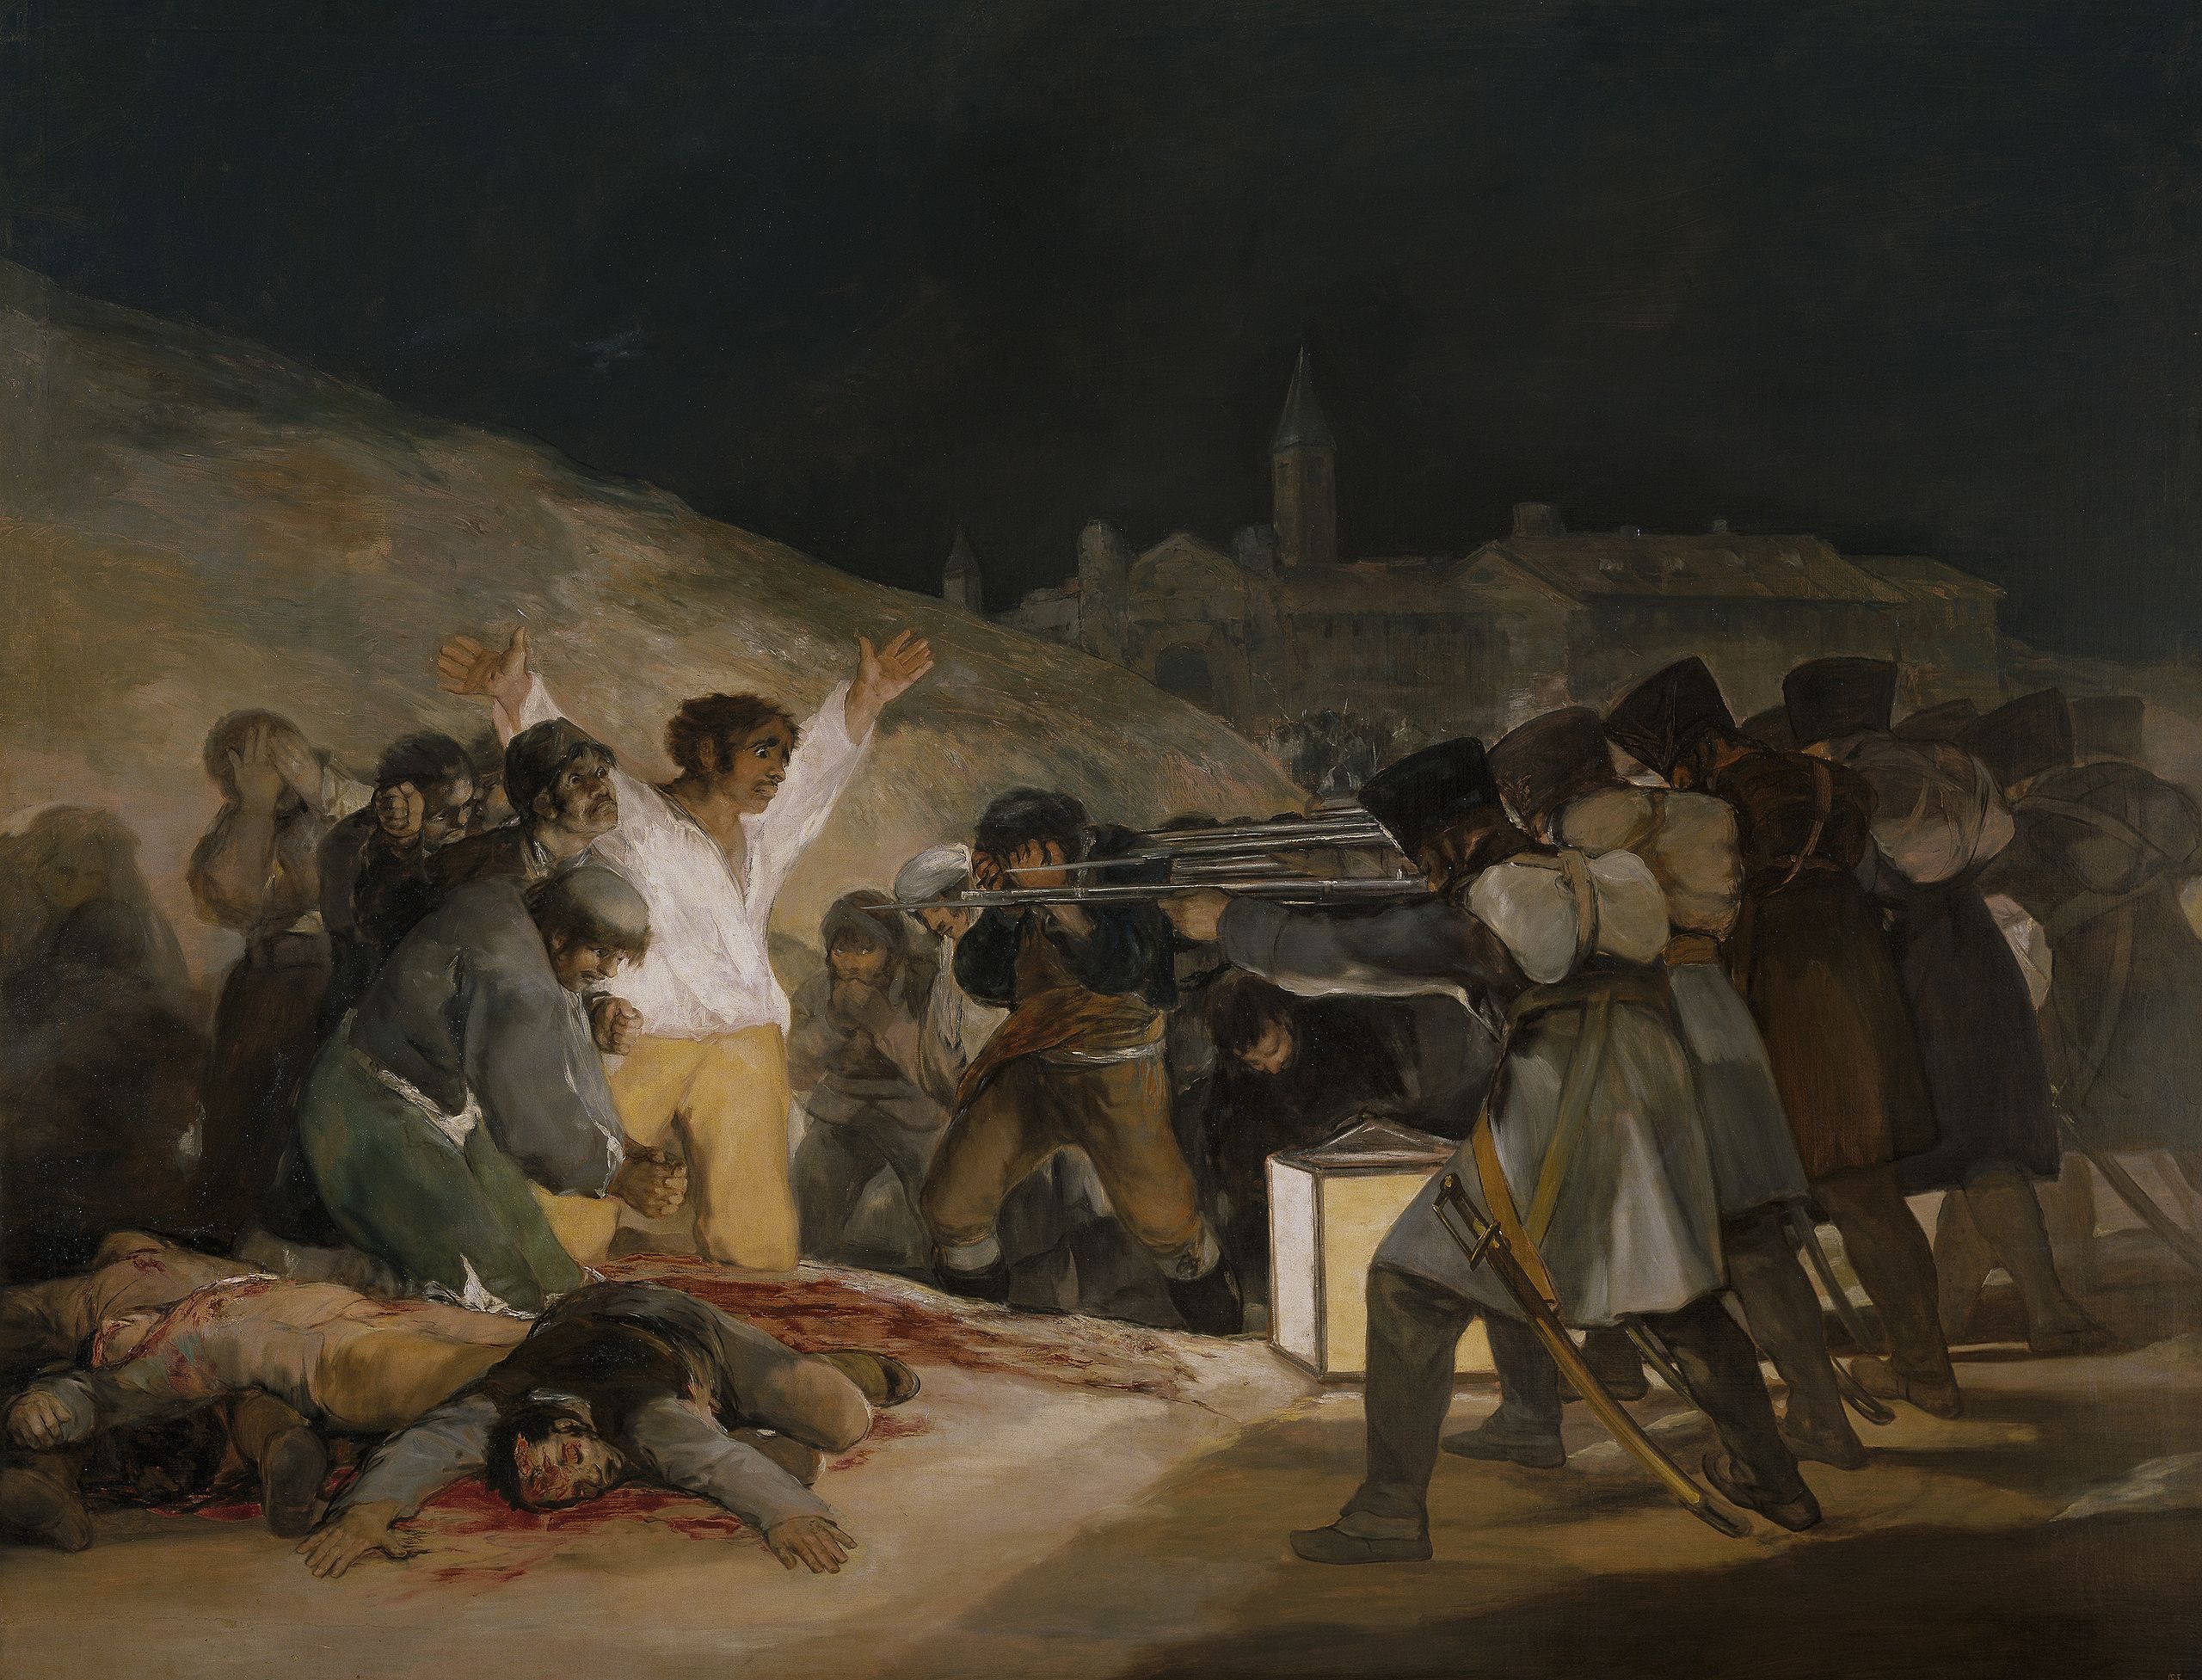 Francisco Goya, The Third of May, 1808, 1814–15, oil on canvas, 8' 9" x 13' 4" (Museo del Prado, Madrid, photo: Botaurus, public domain)